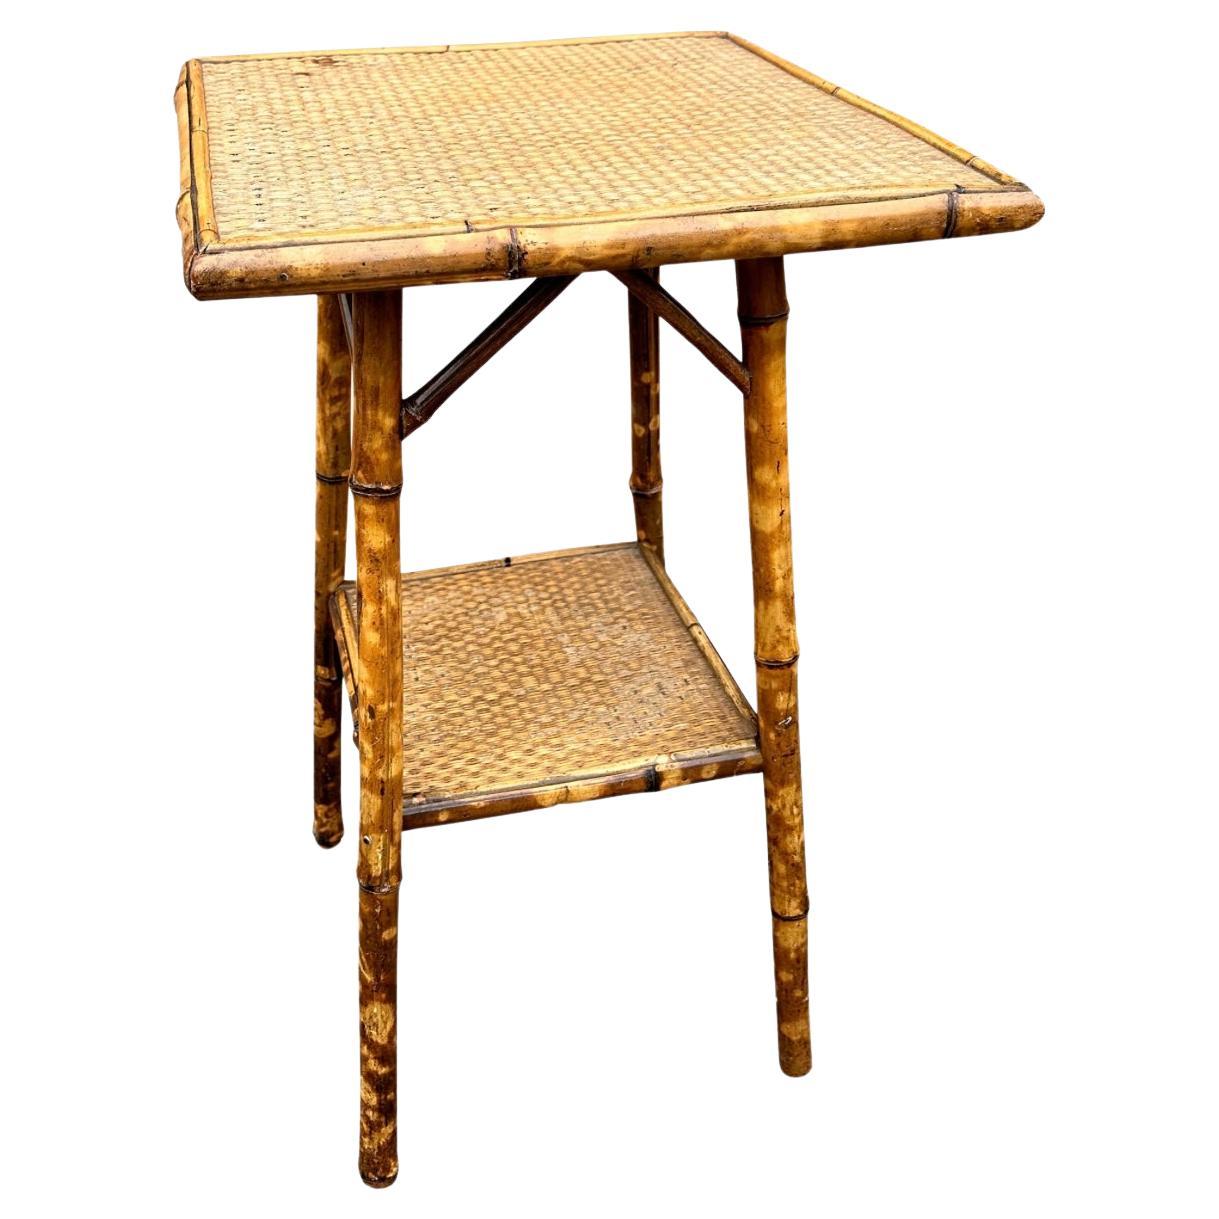 19th Century English Bamboo Table